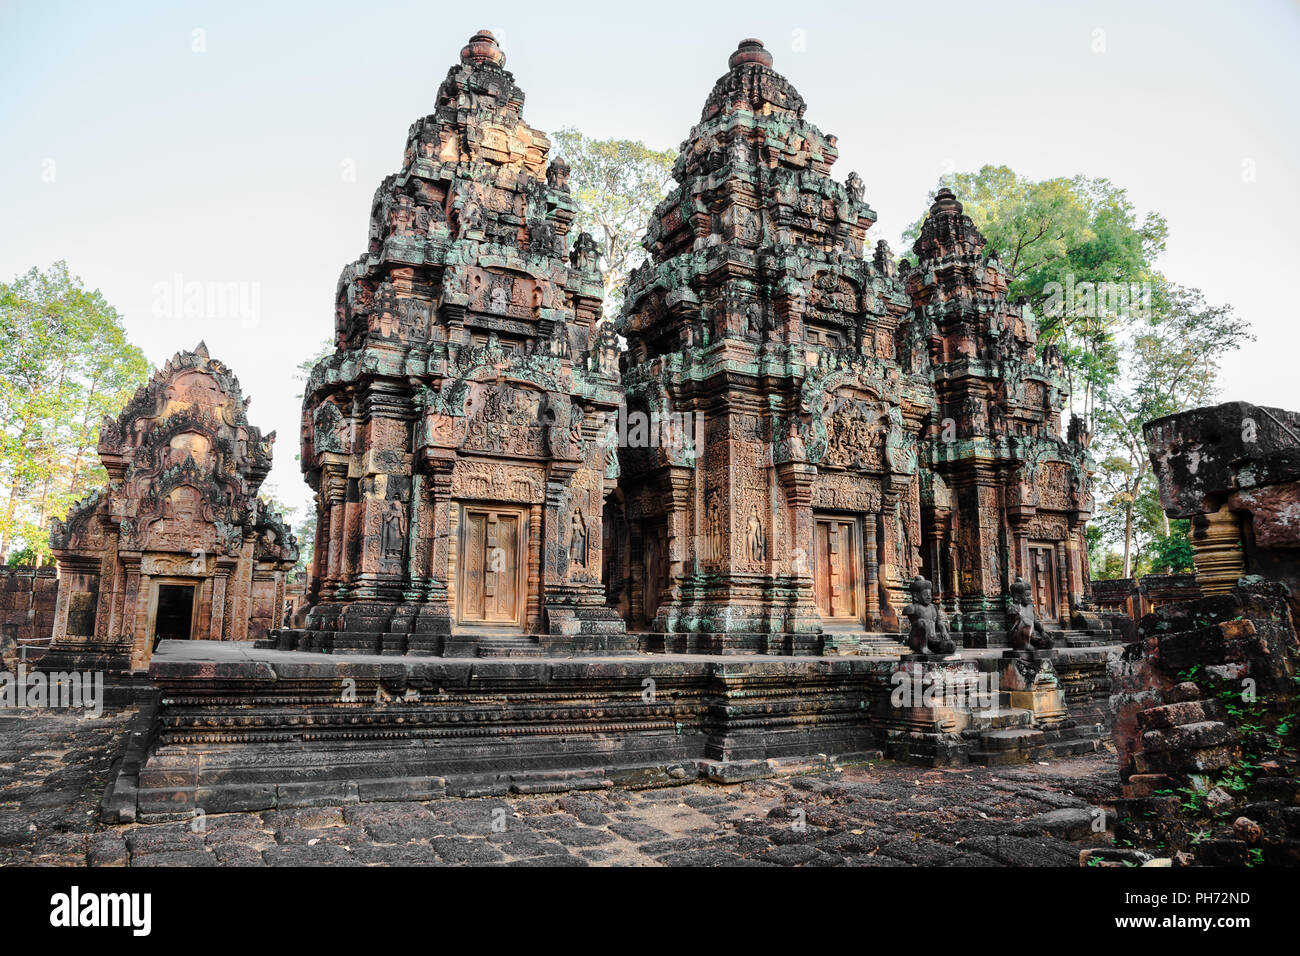 Banteay srey temple Stock Photo